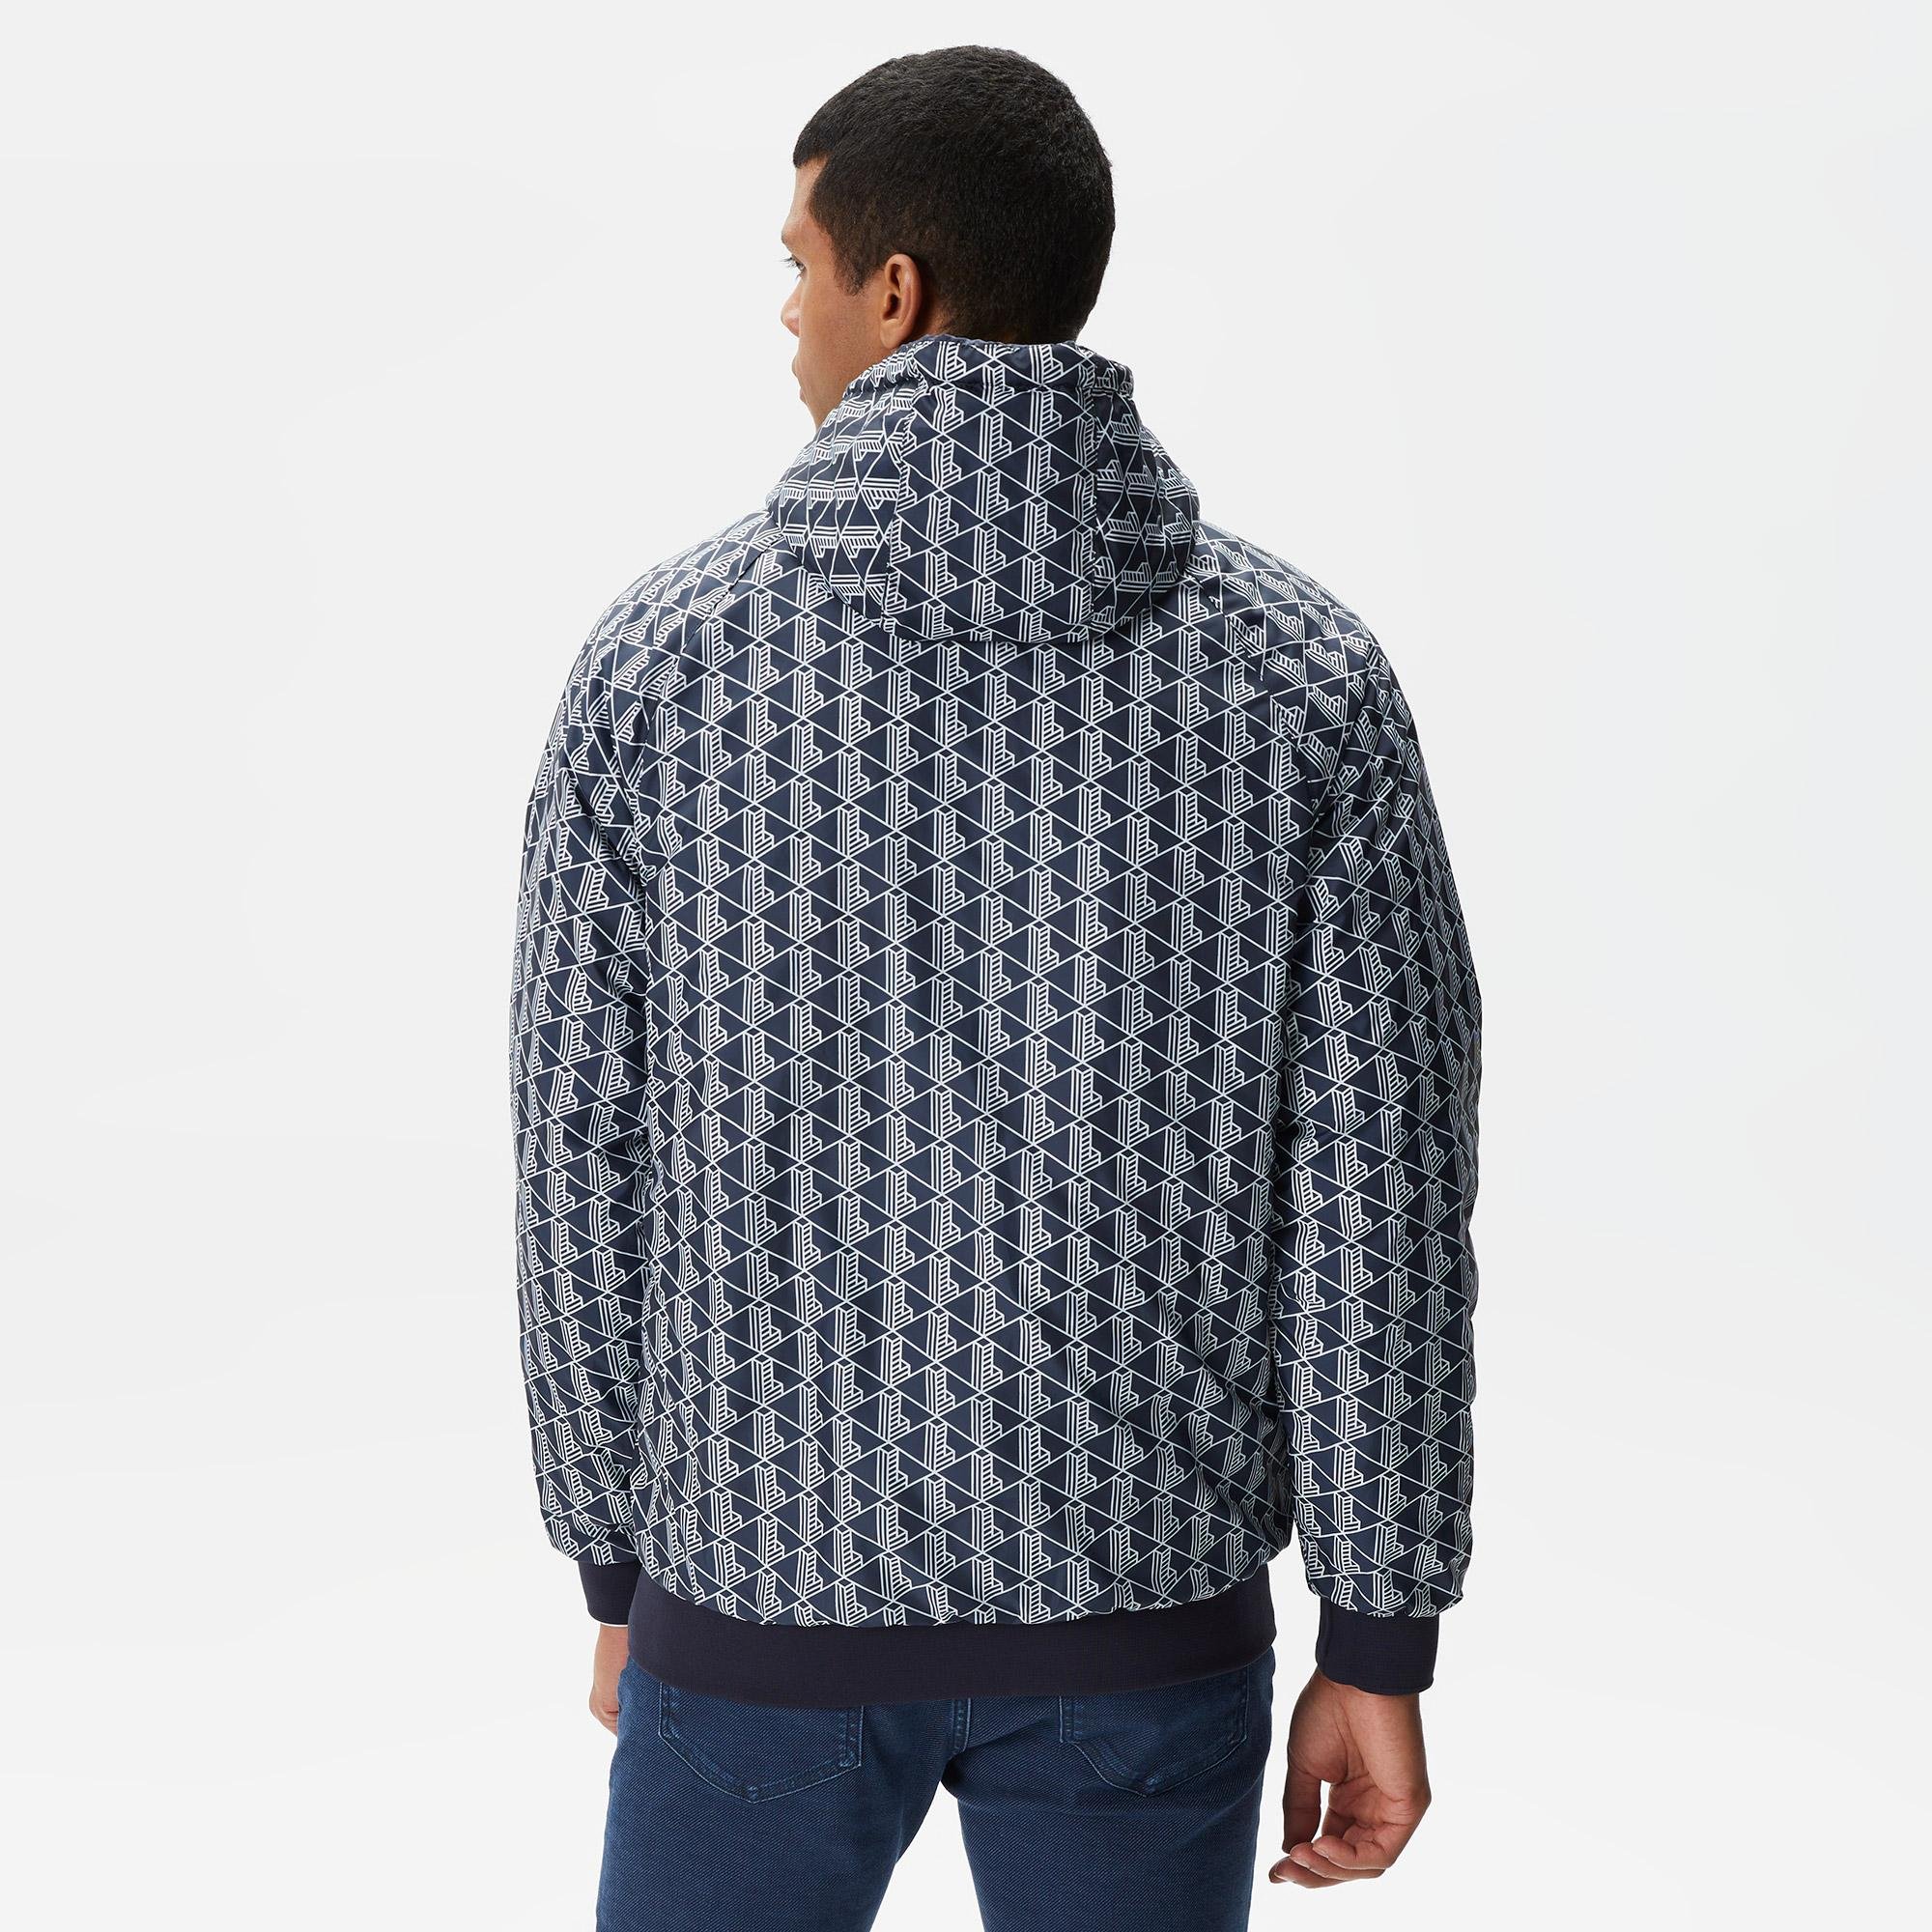 Lacoste Men's Monogram Double-Sided Jacket